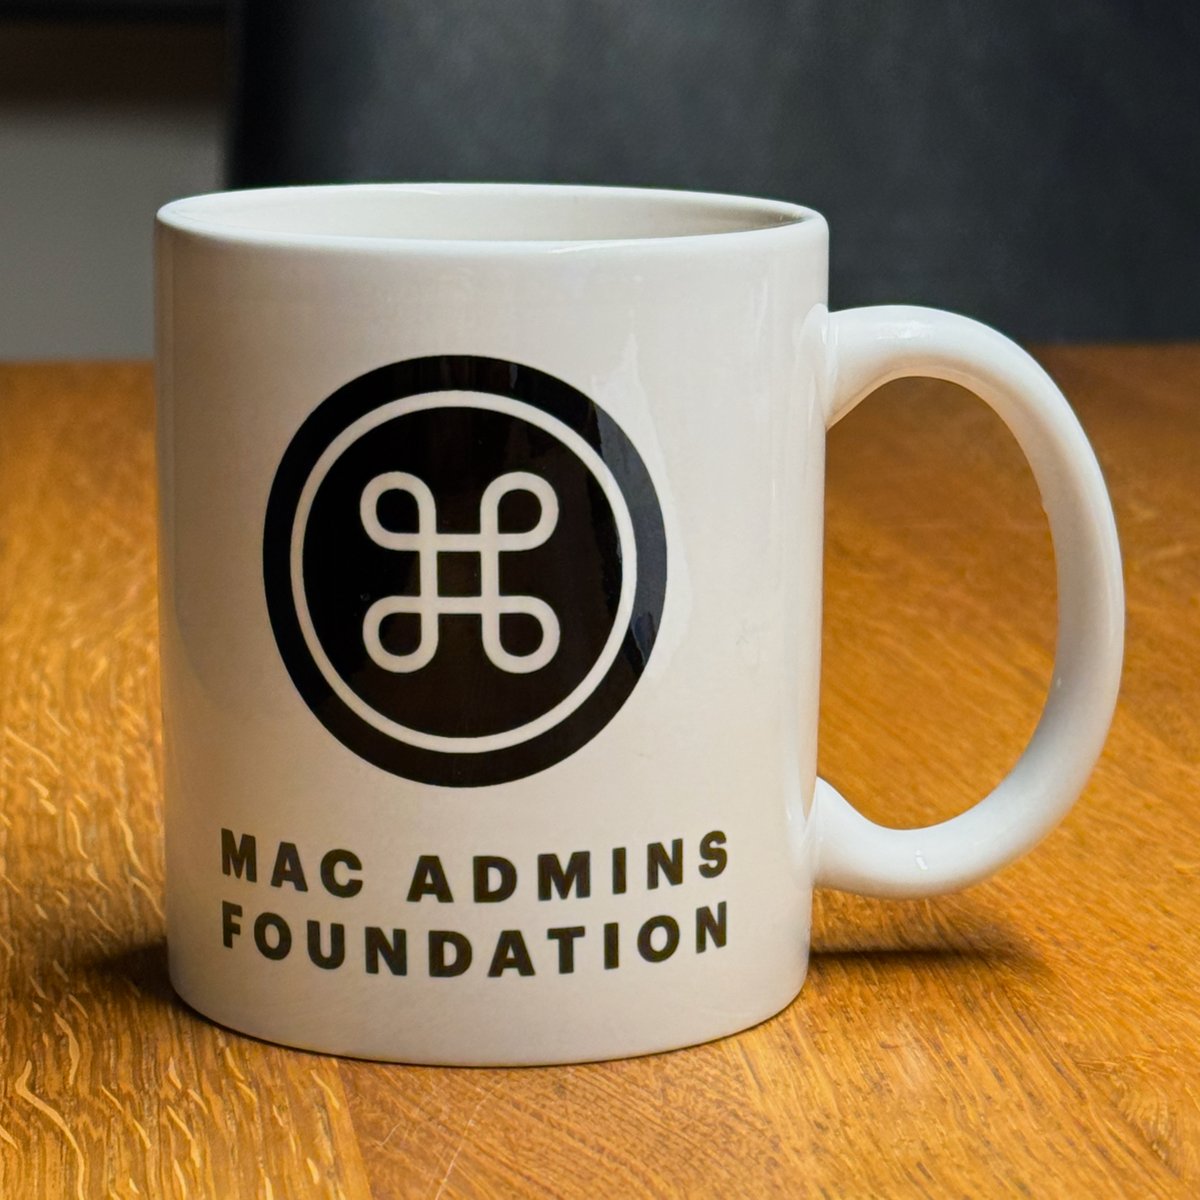 New coffee cup ☕️❤️ @MacAdmFound #MacAdminsFoundation #MacAdmins